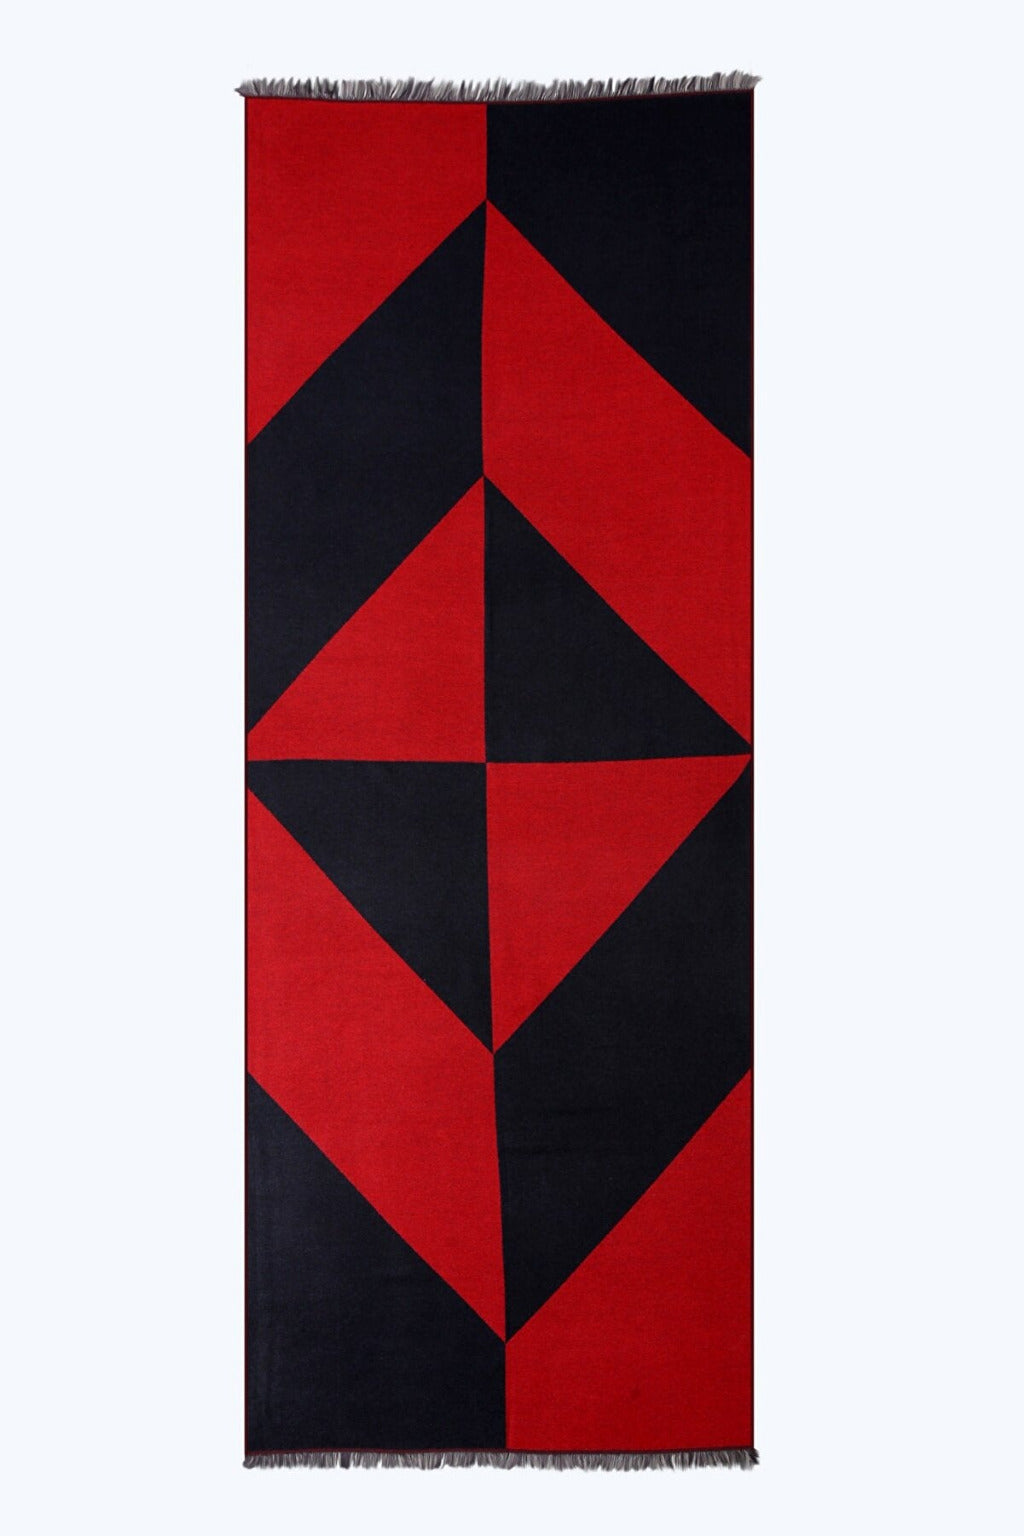 Symmetric Mo-shmeres Triangles Modal Cashmere Dual Tone Shawl - Red Black